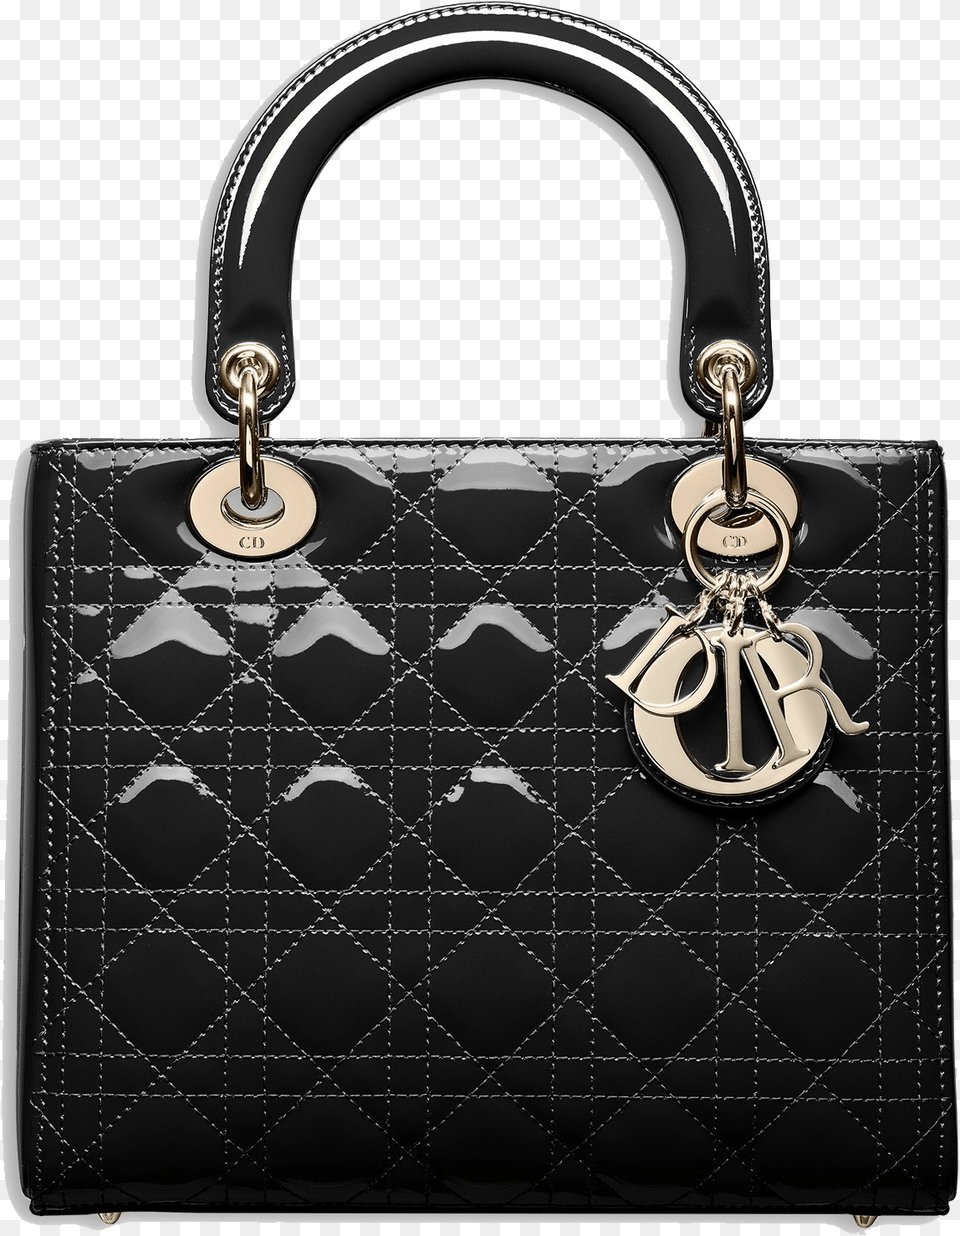 Black Dior Bag Image Background Lady Dior Black Patent, Accessories, Handbag, Purse Png